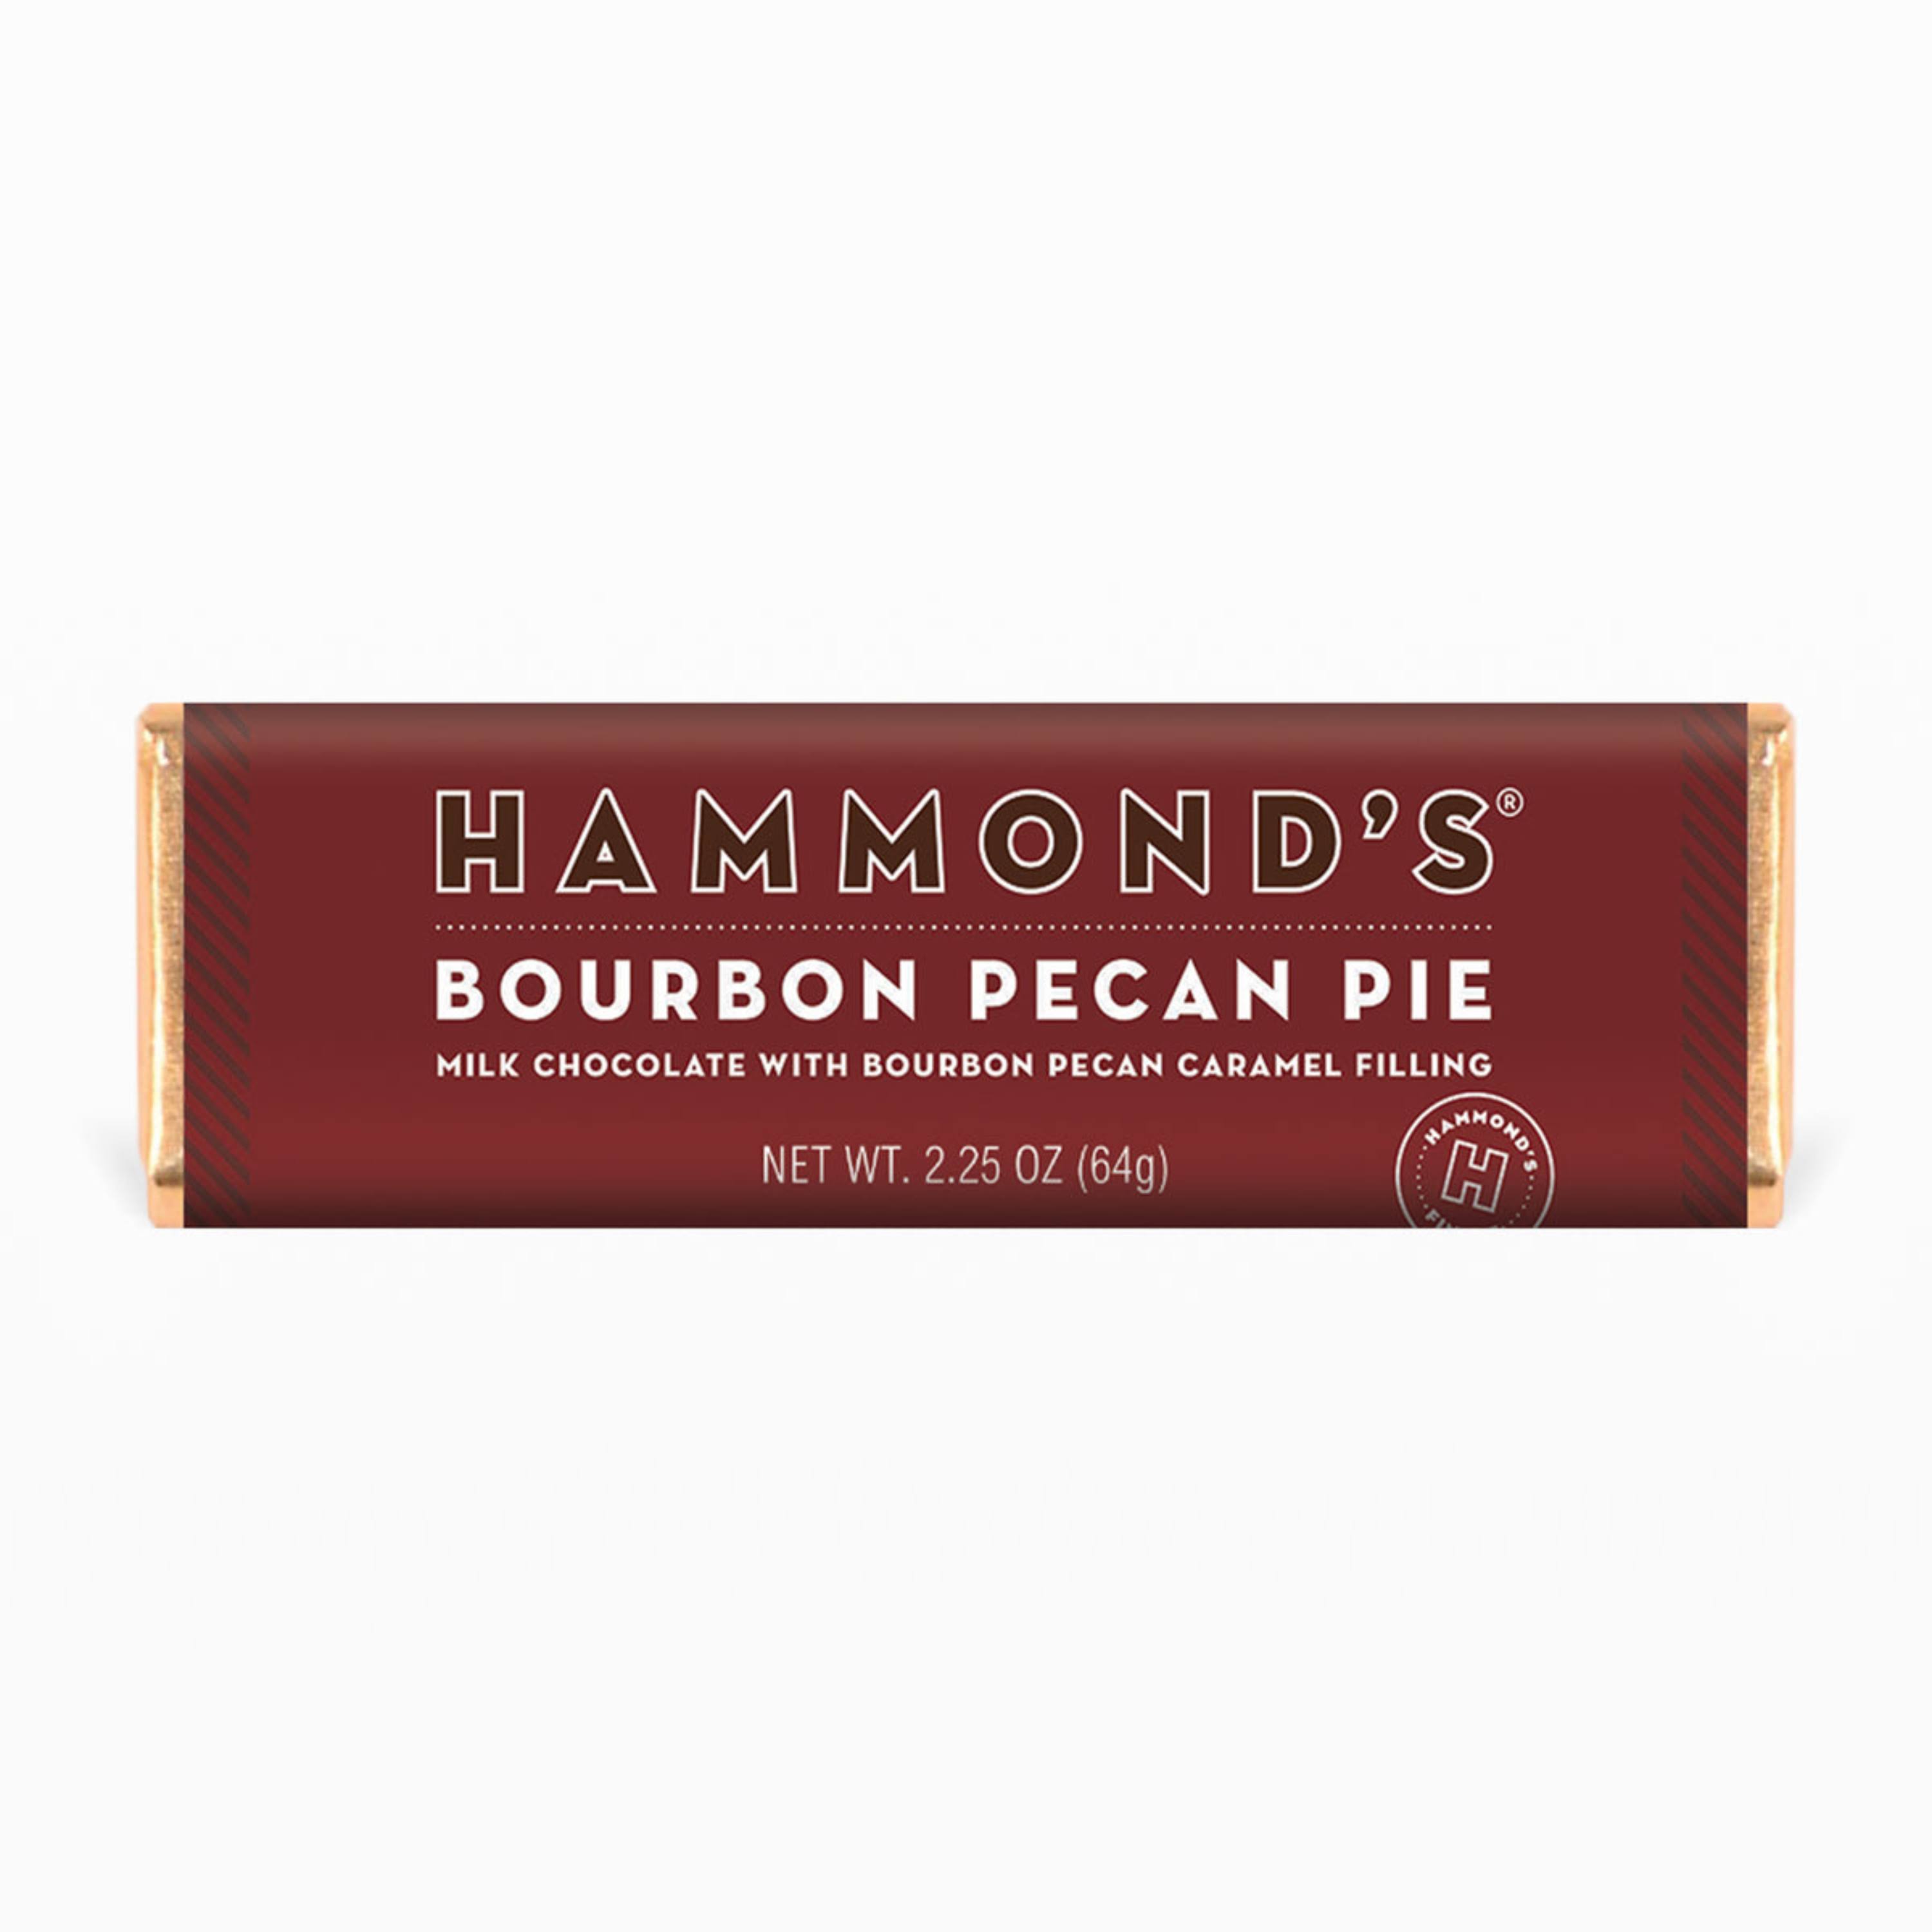 Hammonds Milk Chocolate, with Bourbon Pecan Caramel Filling - 2.25 oz